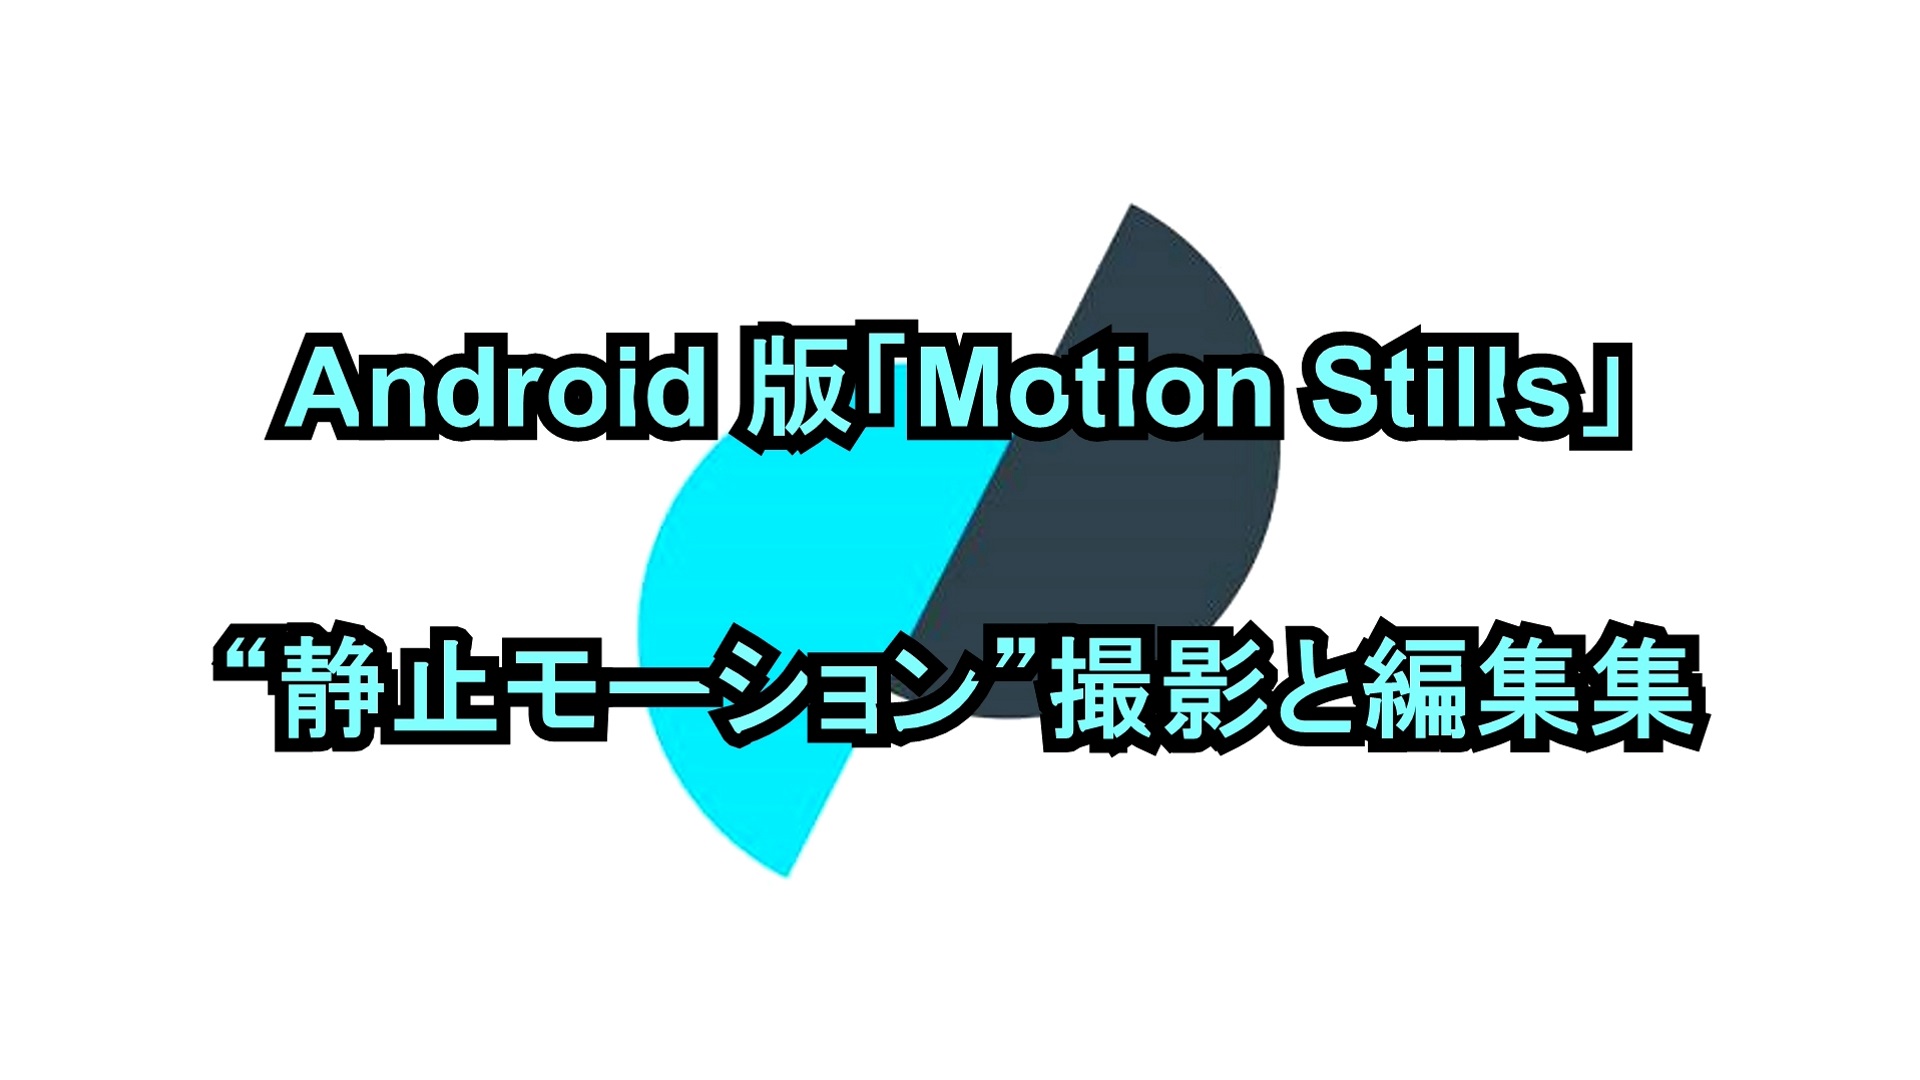 Android版「Motion Stills」“静止モーション”撮影と編集